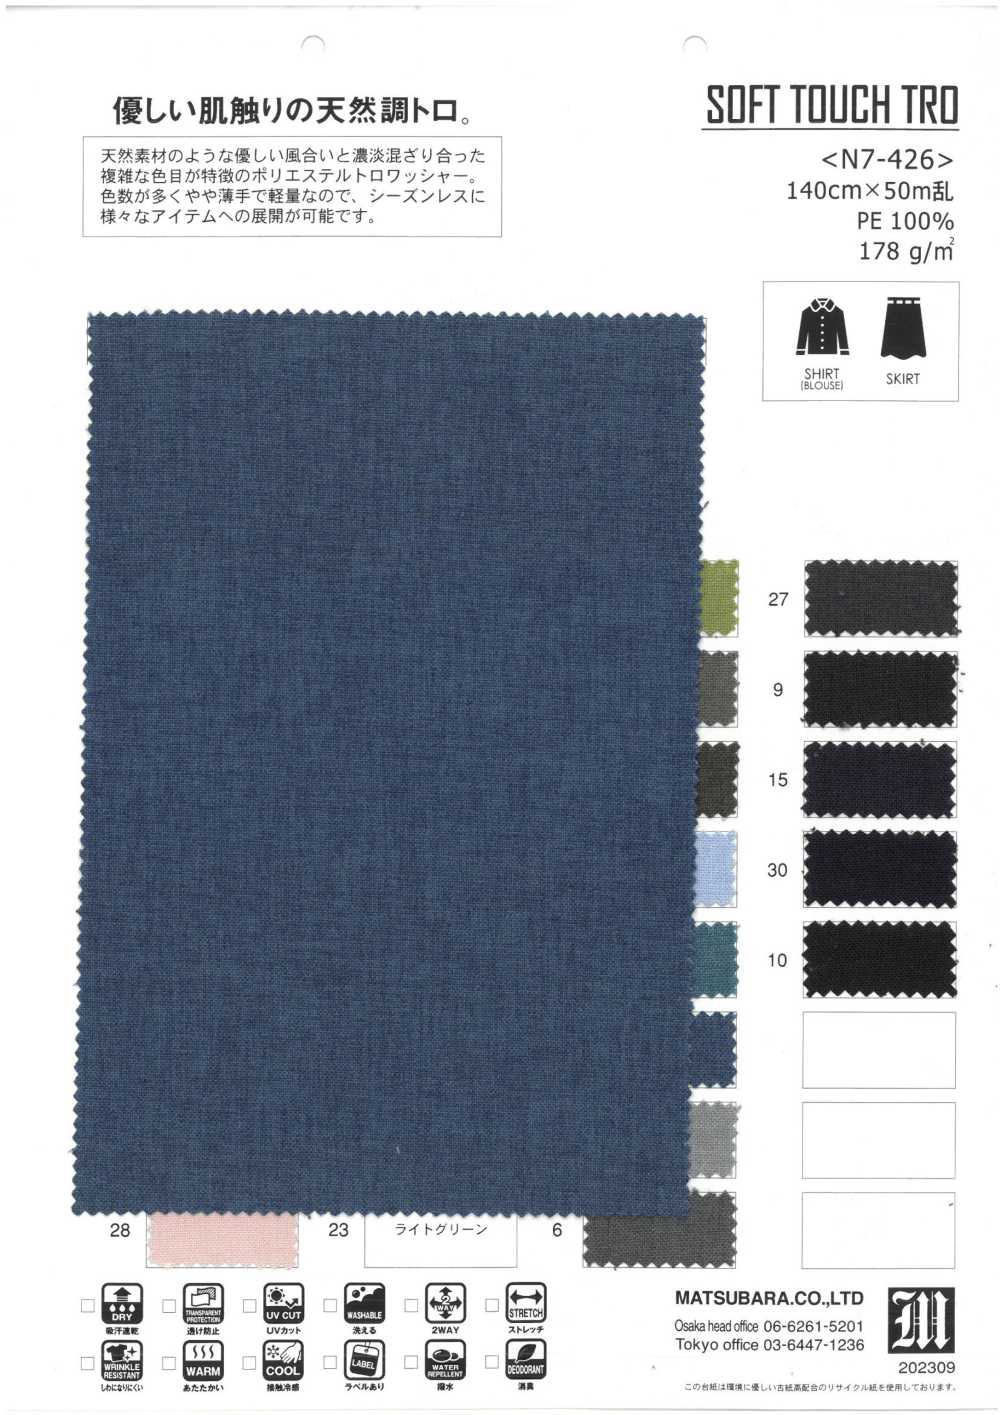 N7-426 SOFY TOUTCH TRO[Textile / Fabric] Matsubara